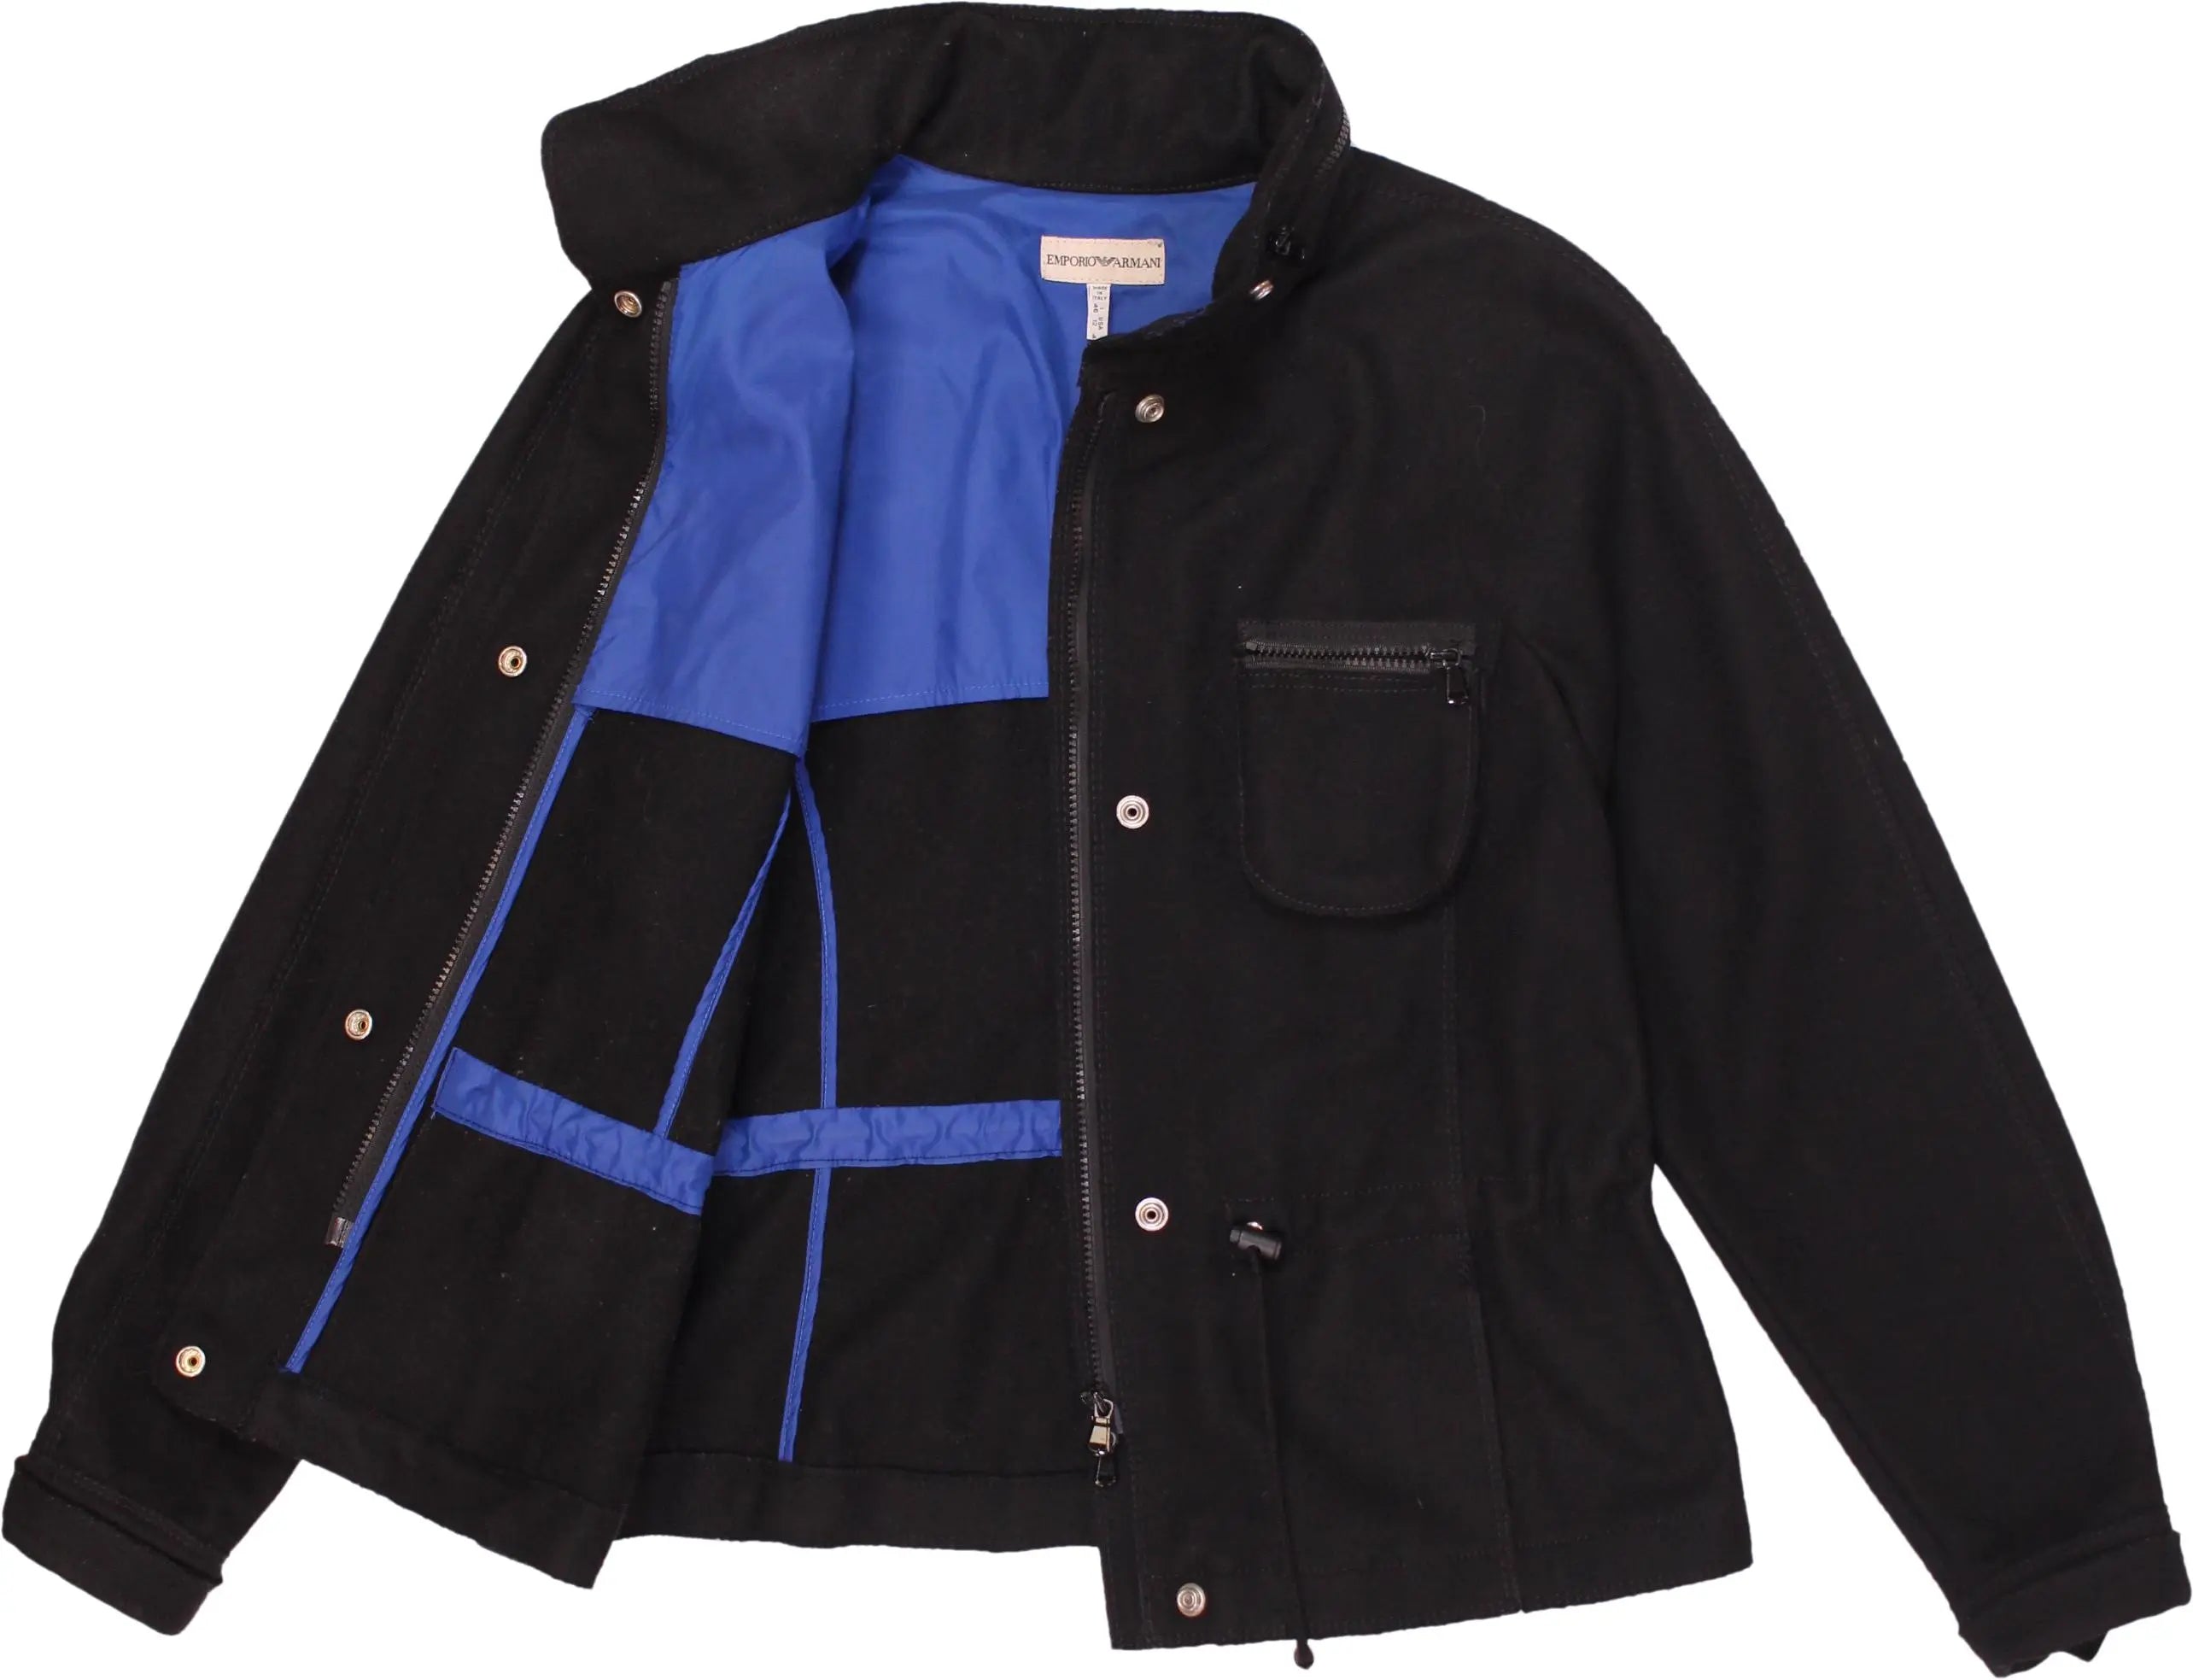 Emporio Armani - Black Wool Armani Jacket- ThriftTale.com - Vintage and second handclothing